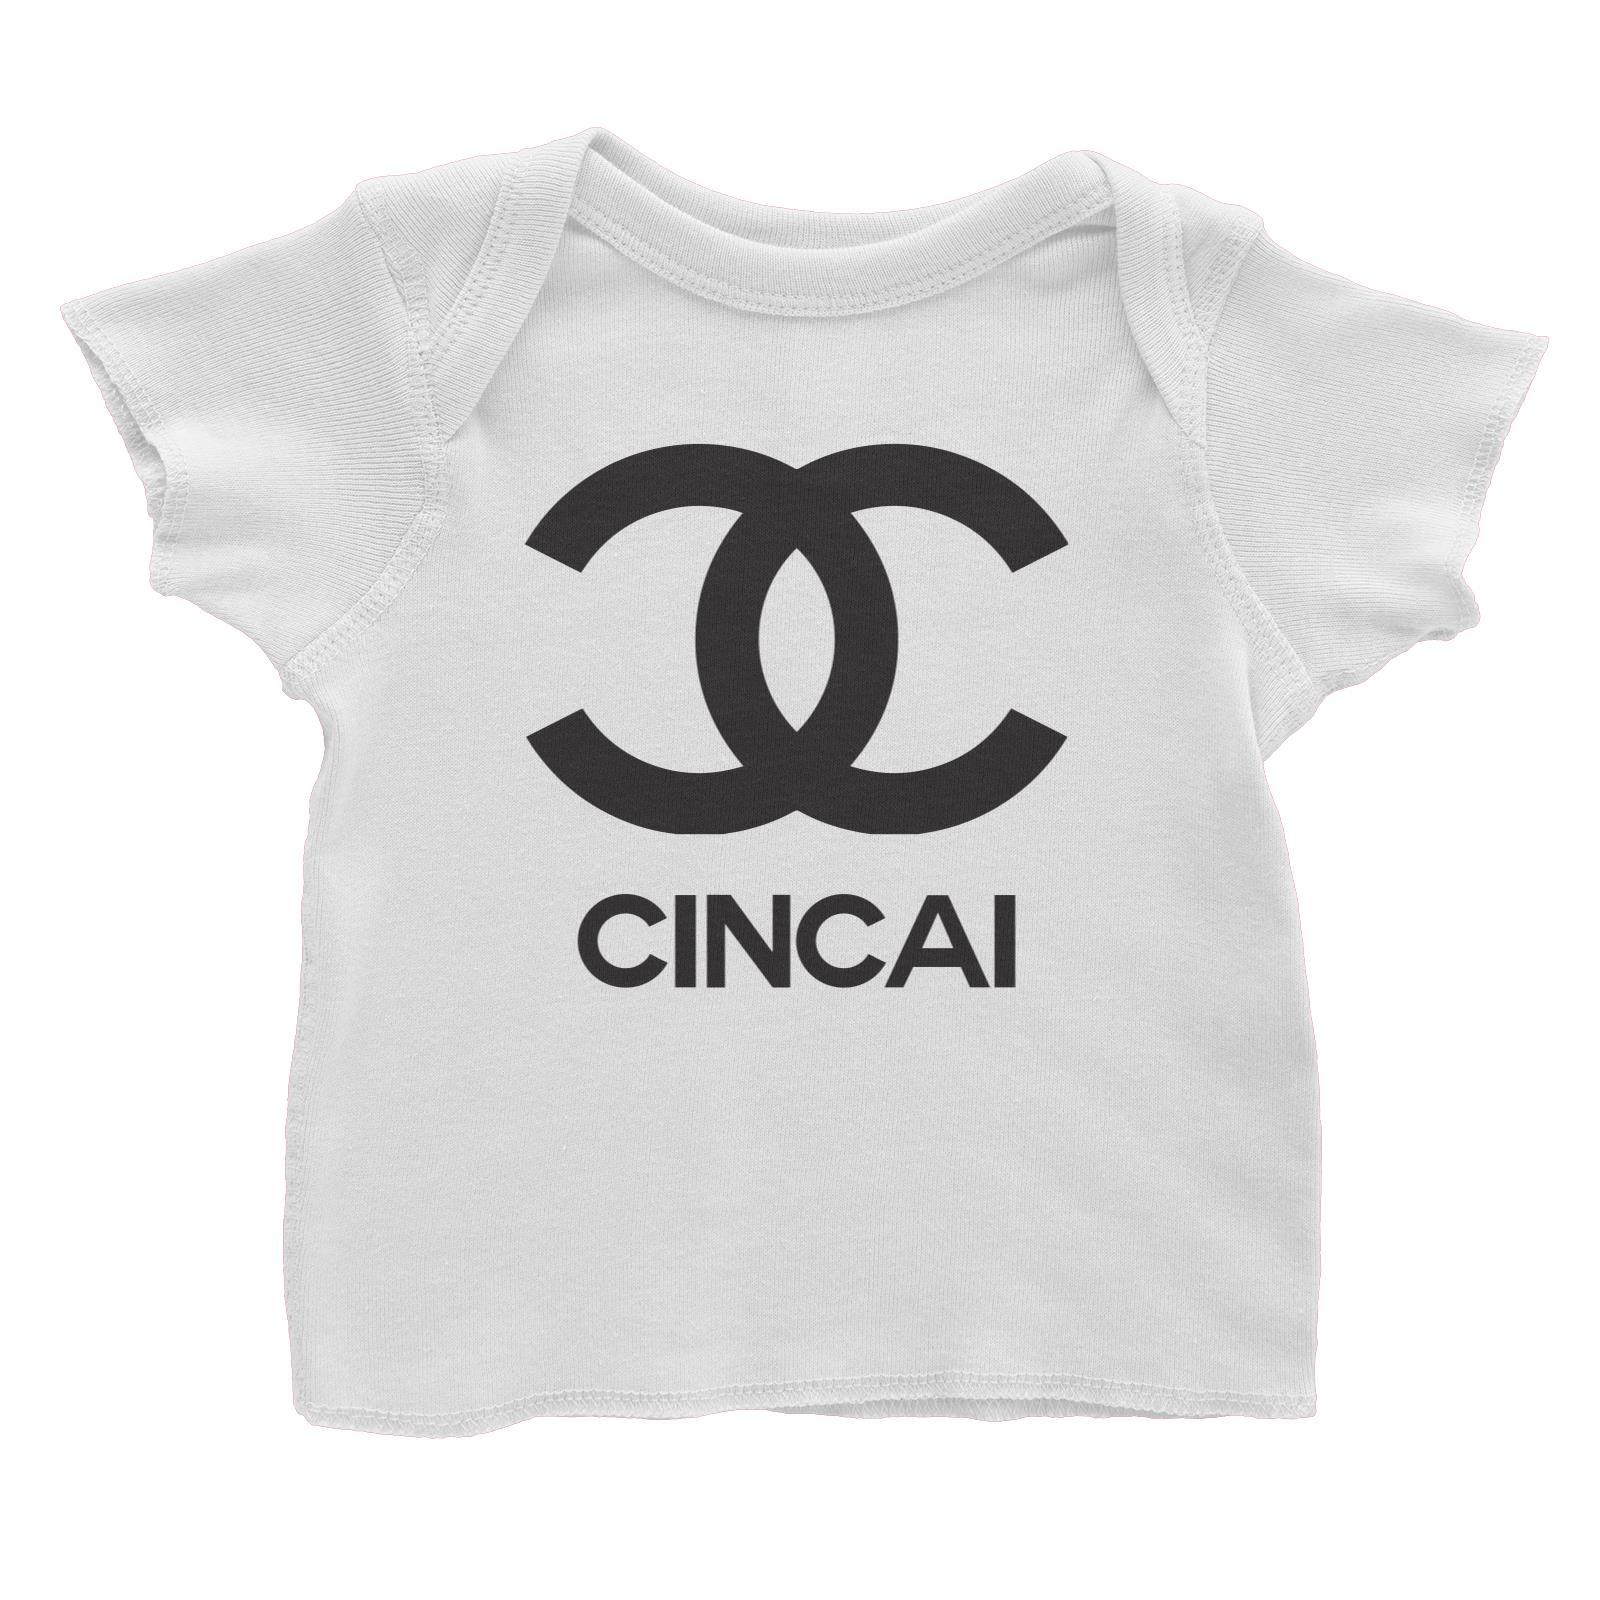 Slang Statement Cincai Baby T-Shirt